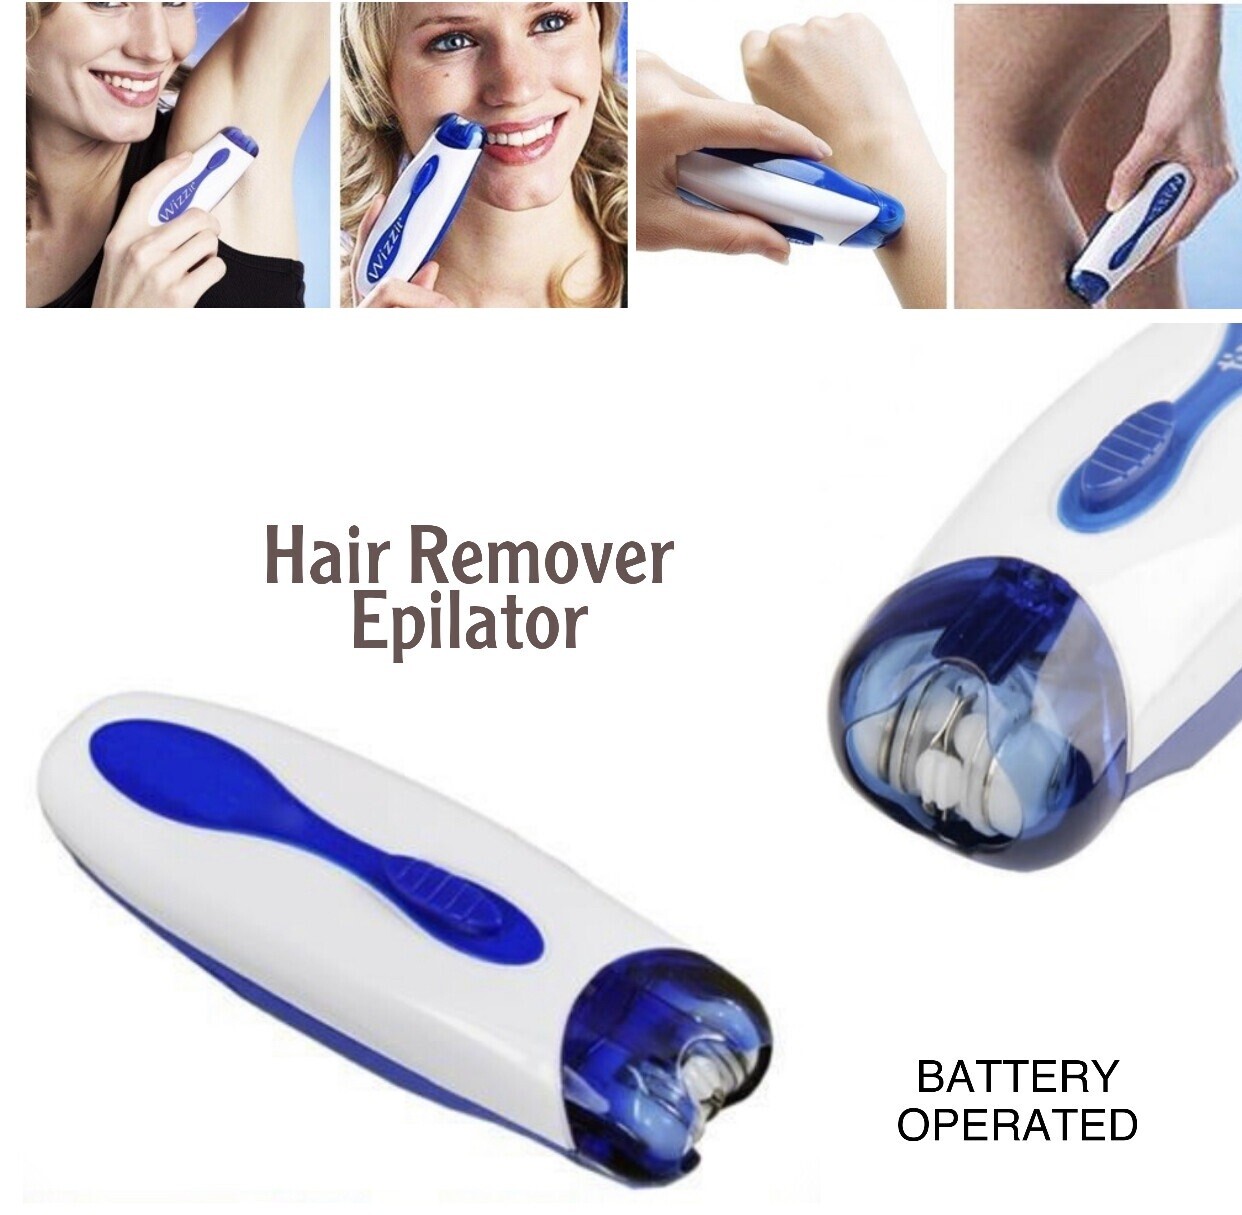 Hair Remover Epilator